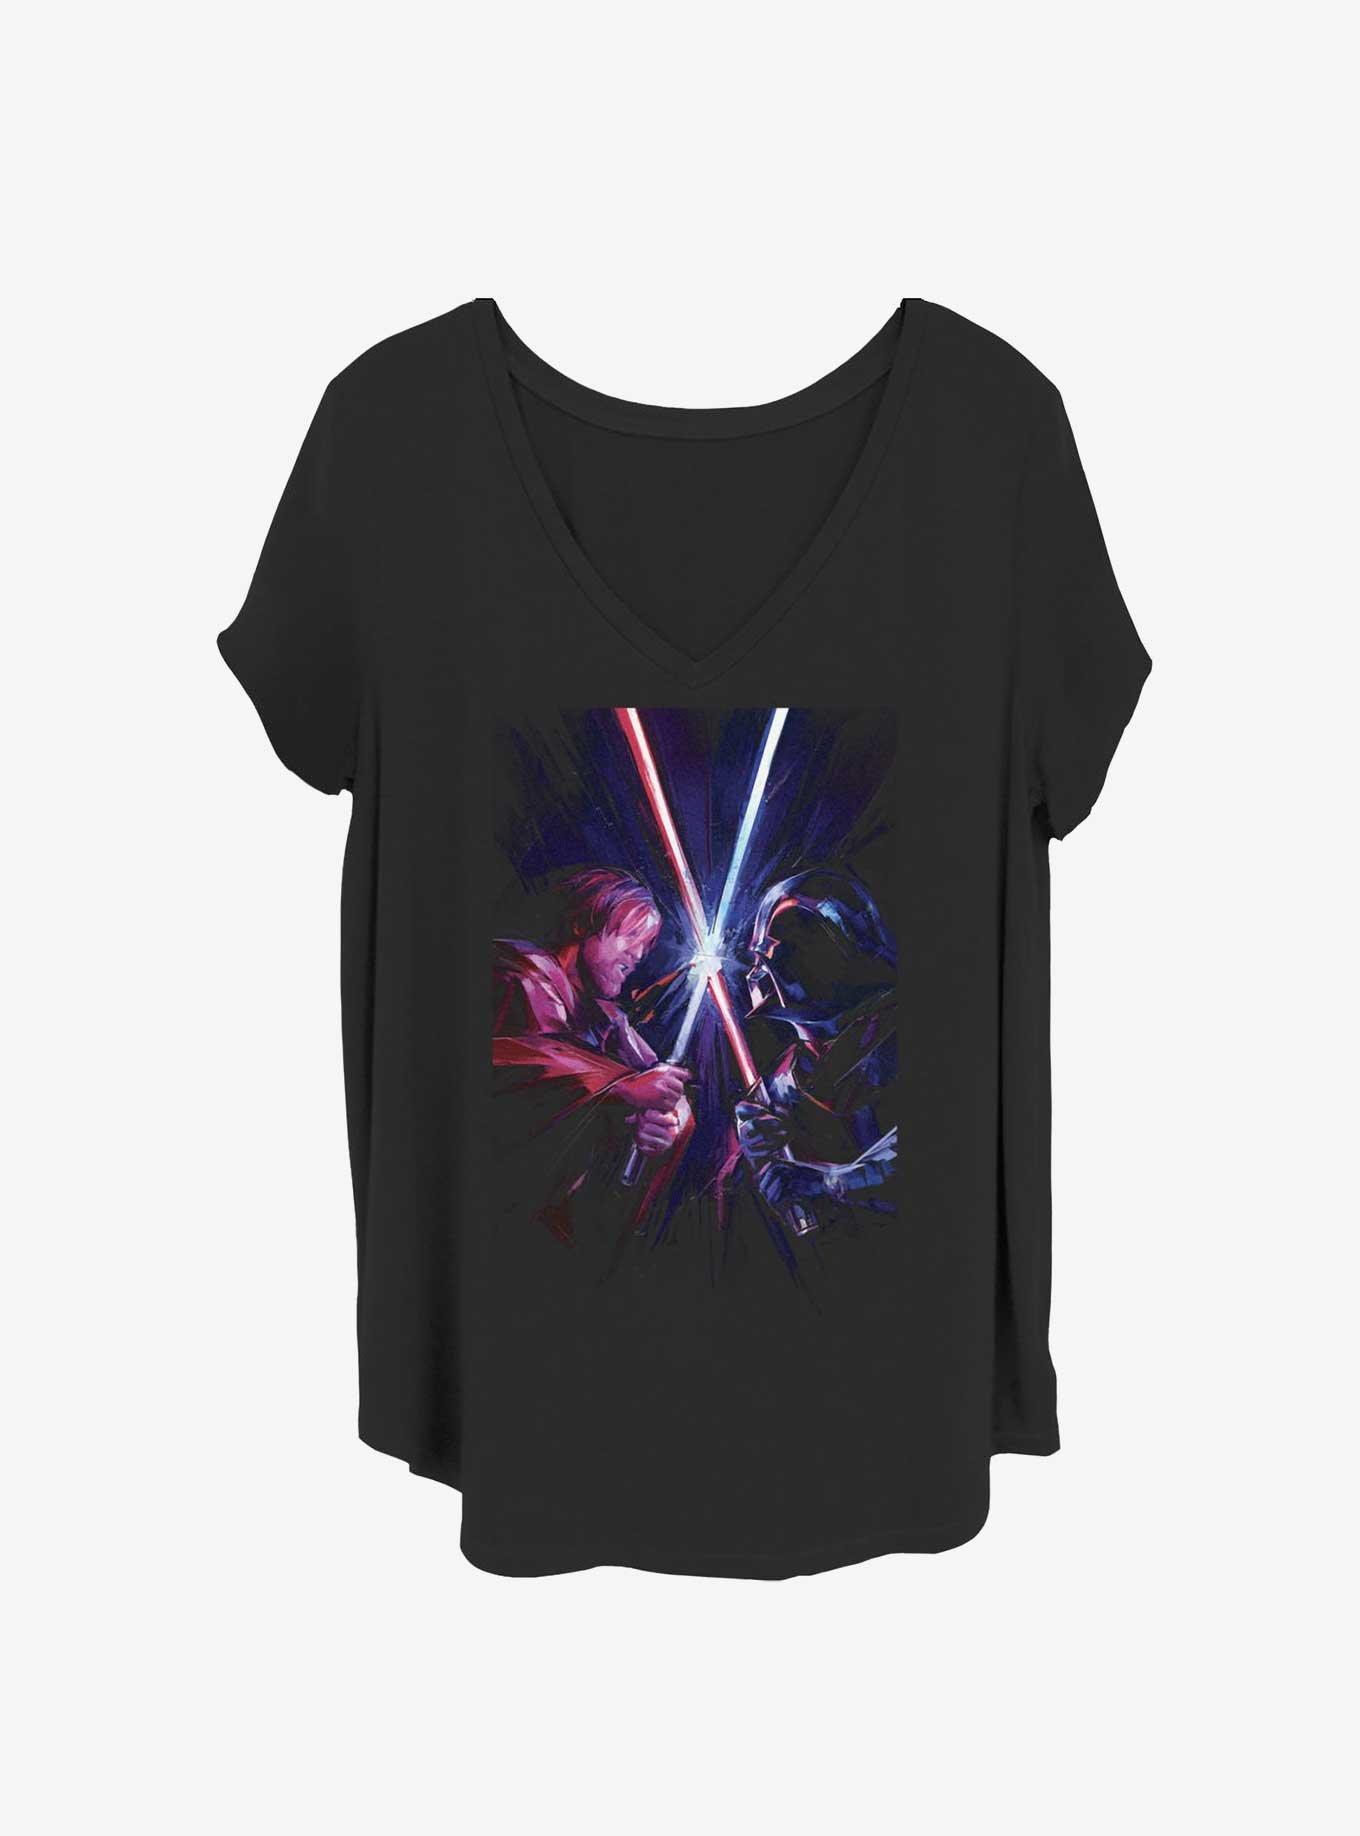 Star Wars Kenobi & Vader Battle Clash Girls T-Shirt Plus